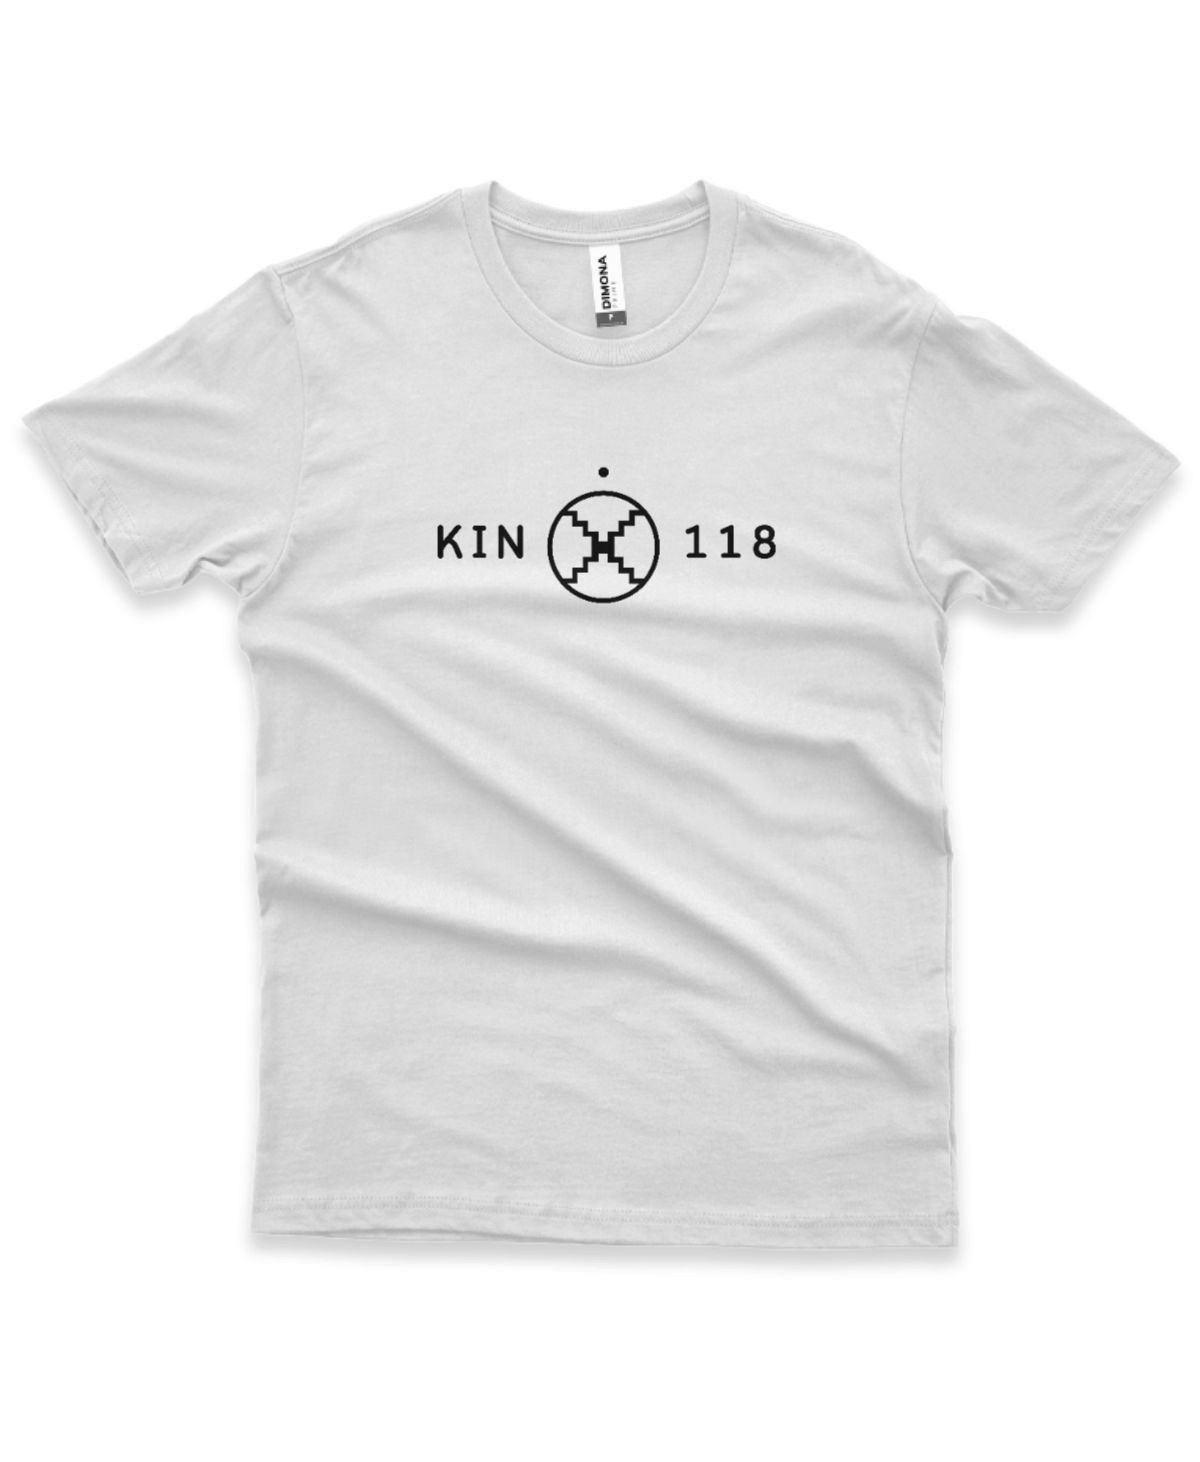 Camiseta Branca Kin 118 - Espelho Magnético Branco